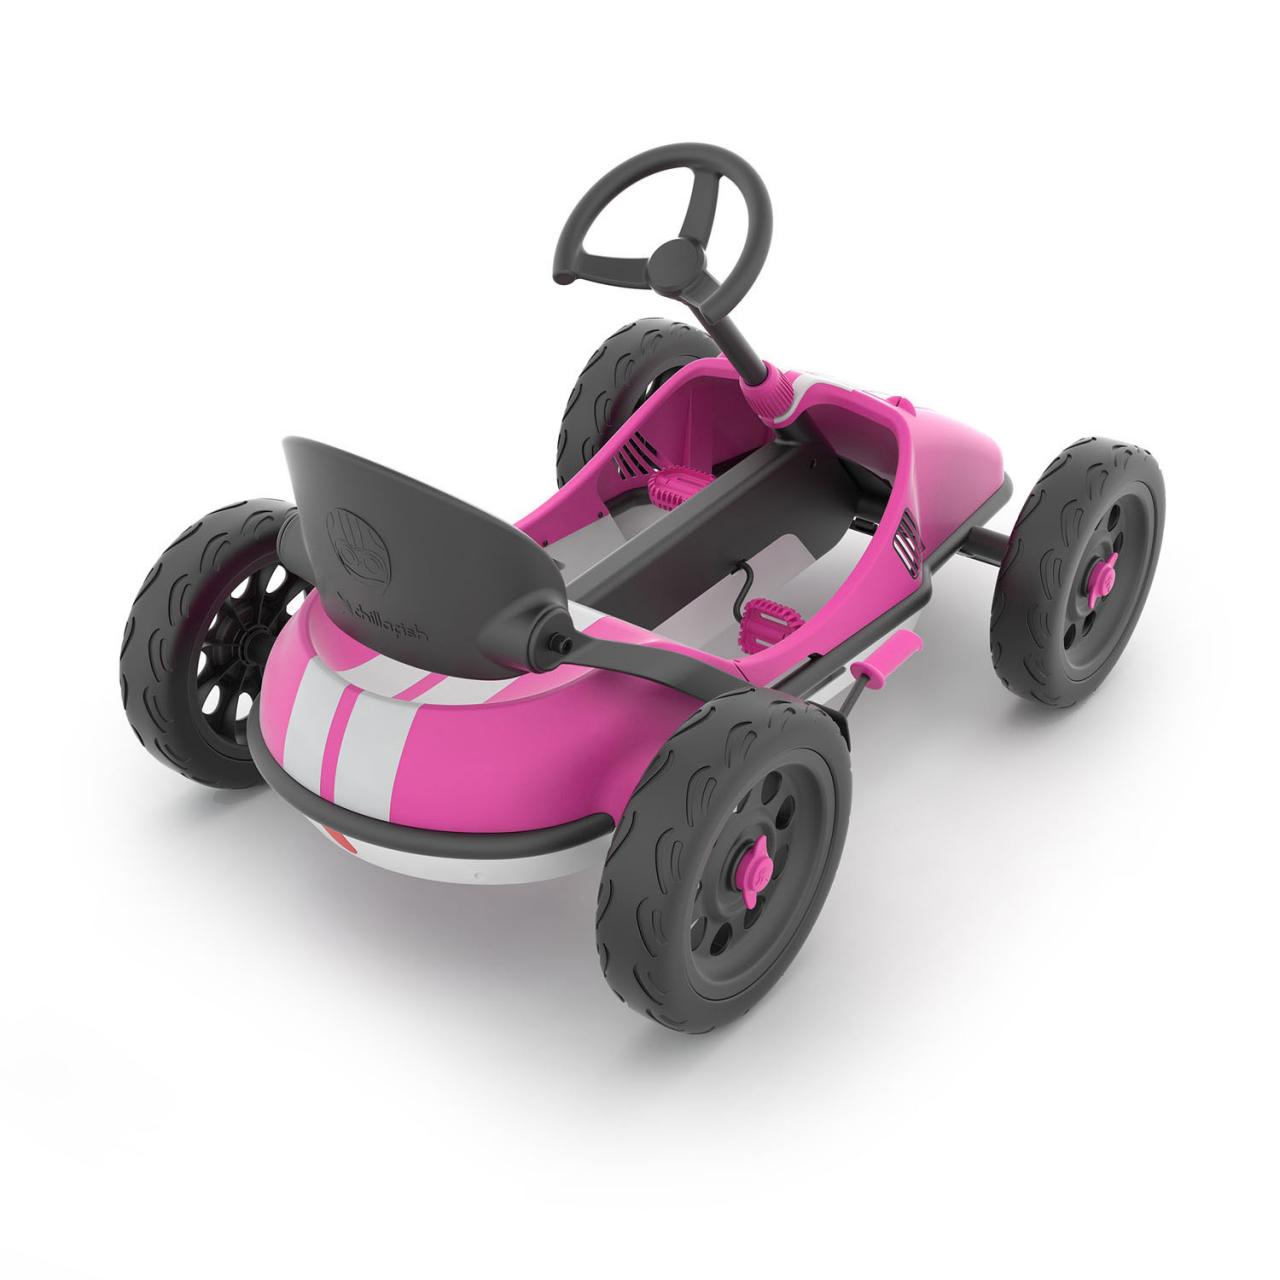 Chillafish Monzi RS Go-kart - Pink | Thimble Toys